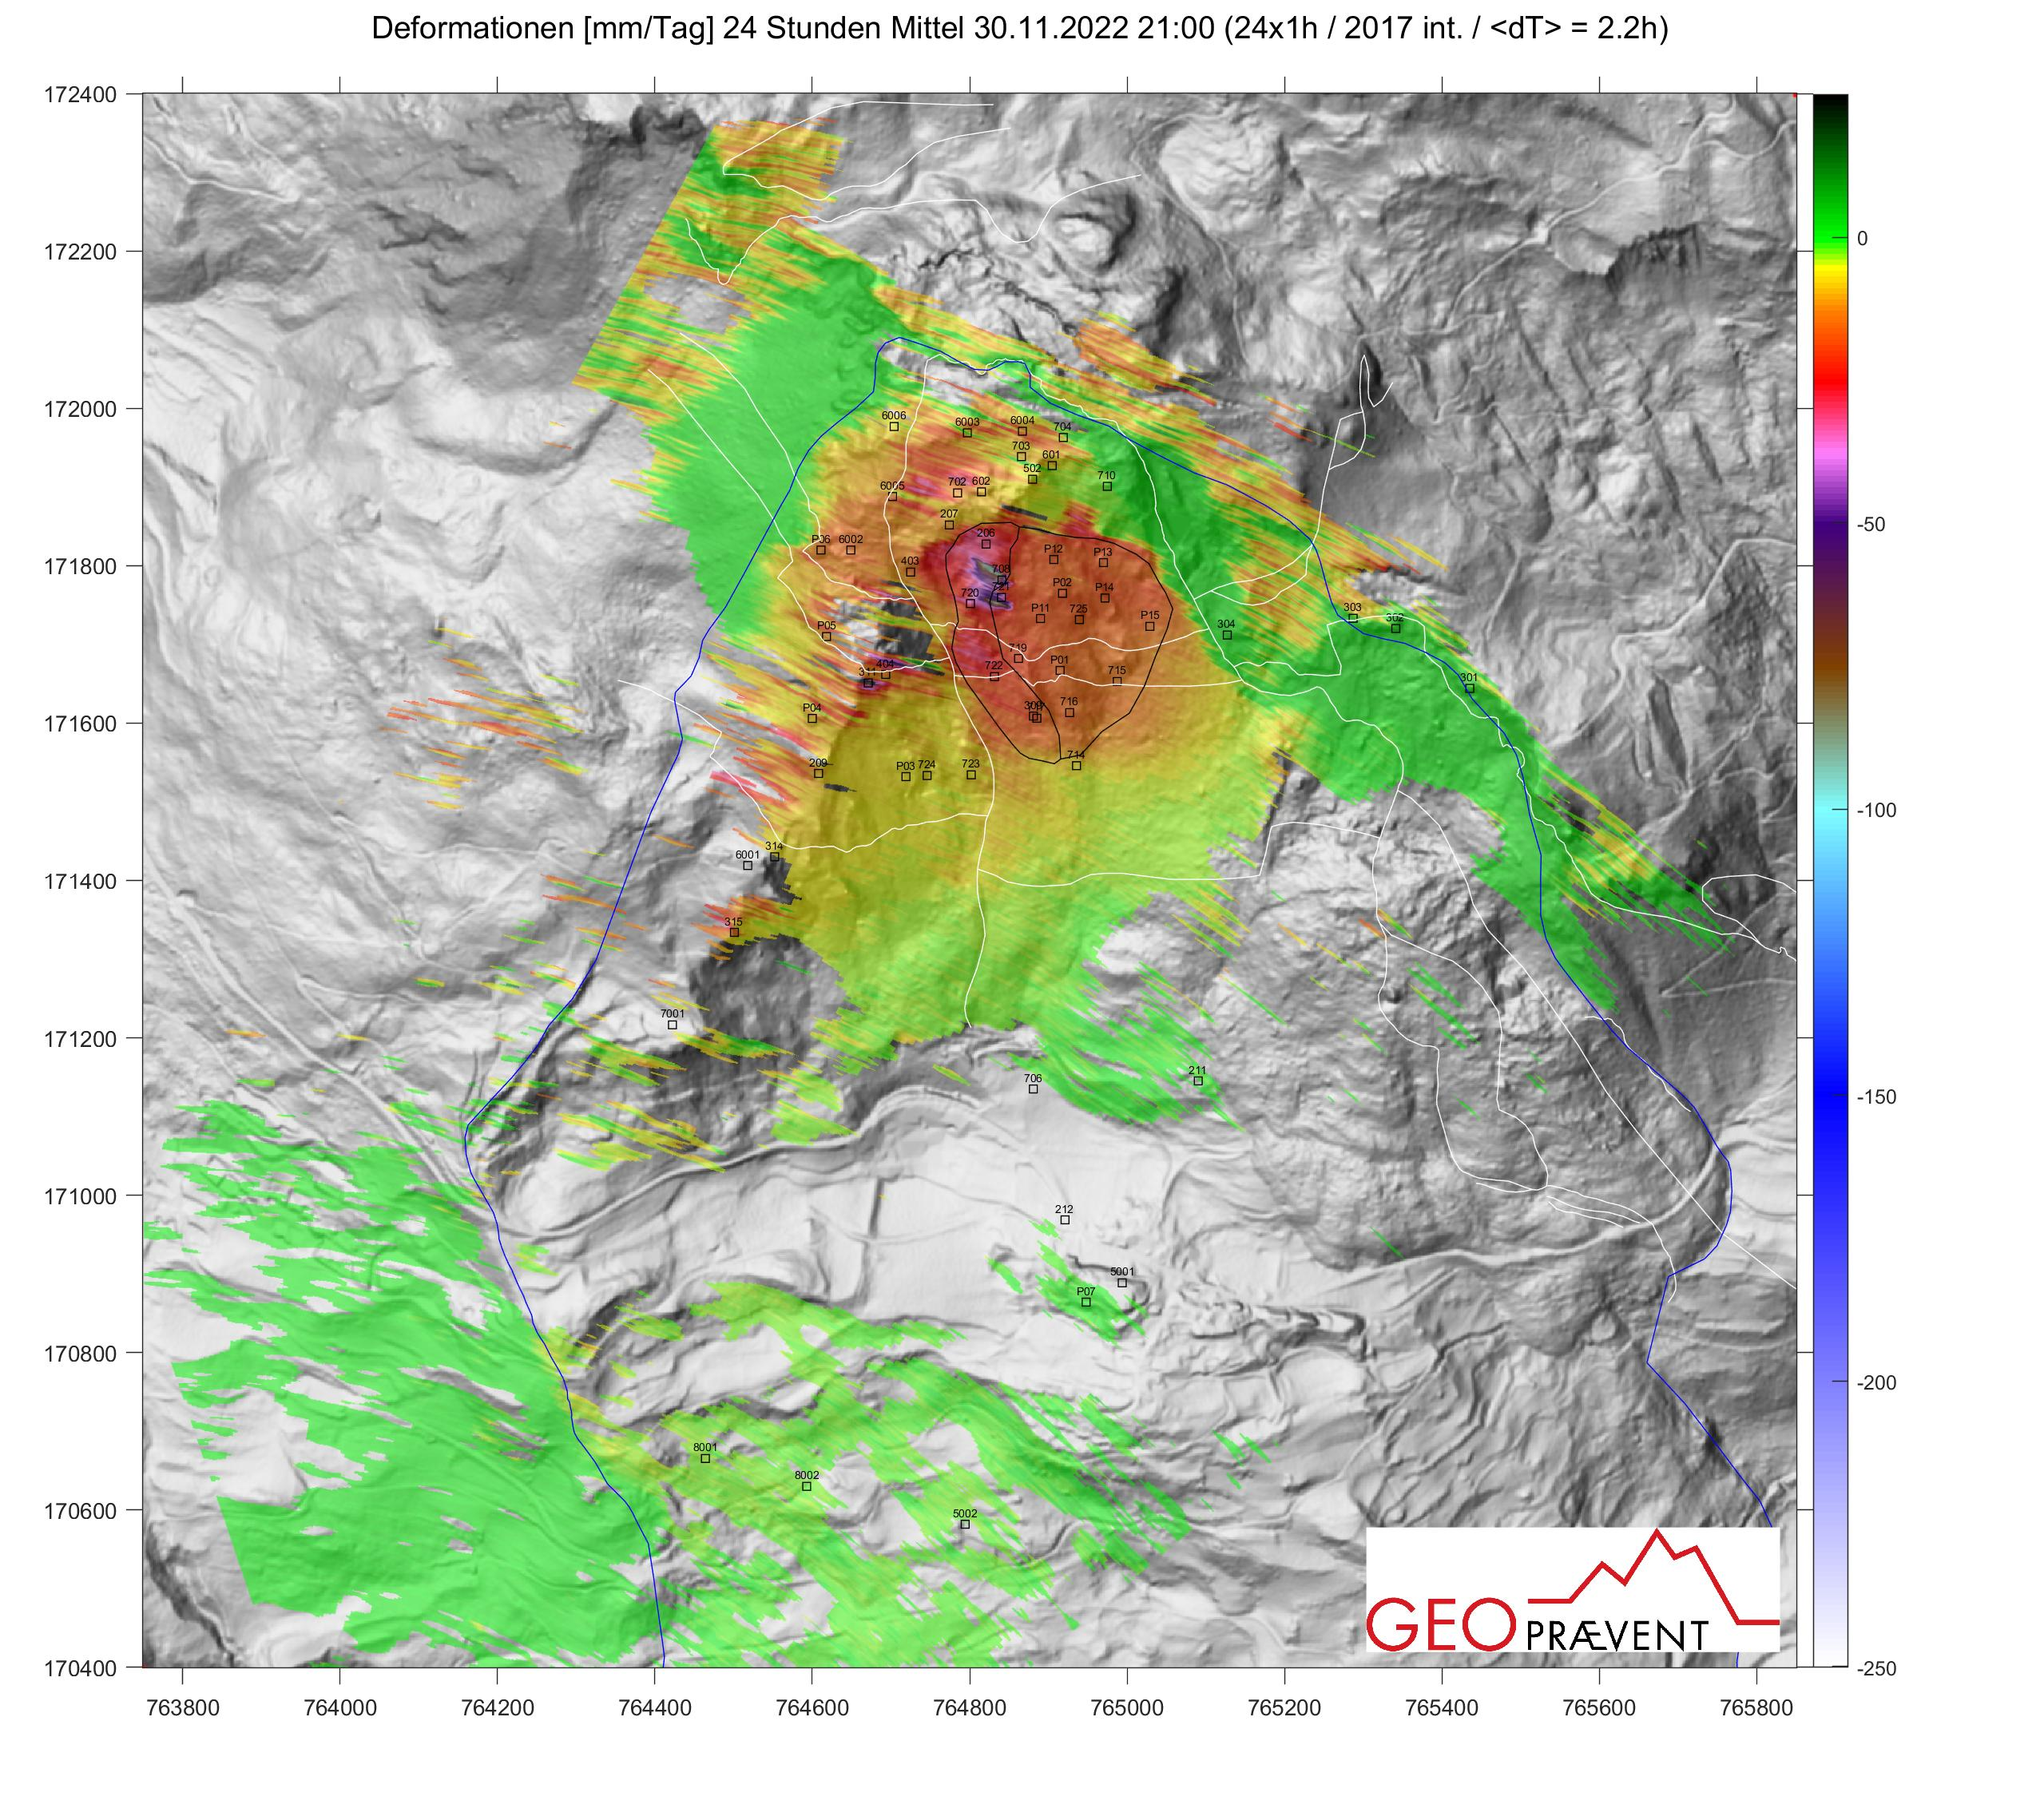 Figure 4: Map view of LOS Displacements on November 30, 2022 from Georadar 24h-AIM Interpretation